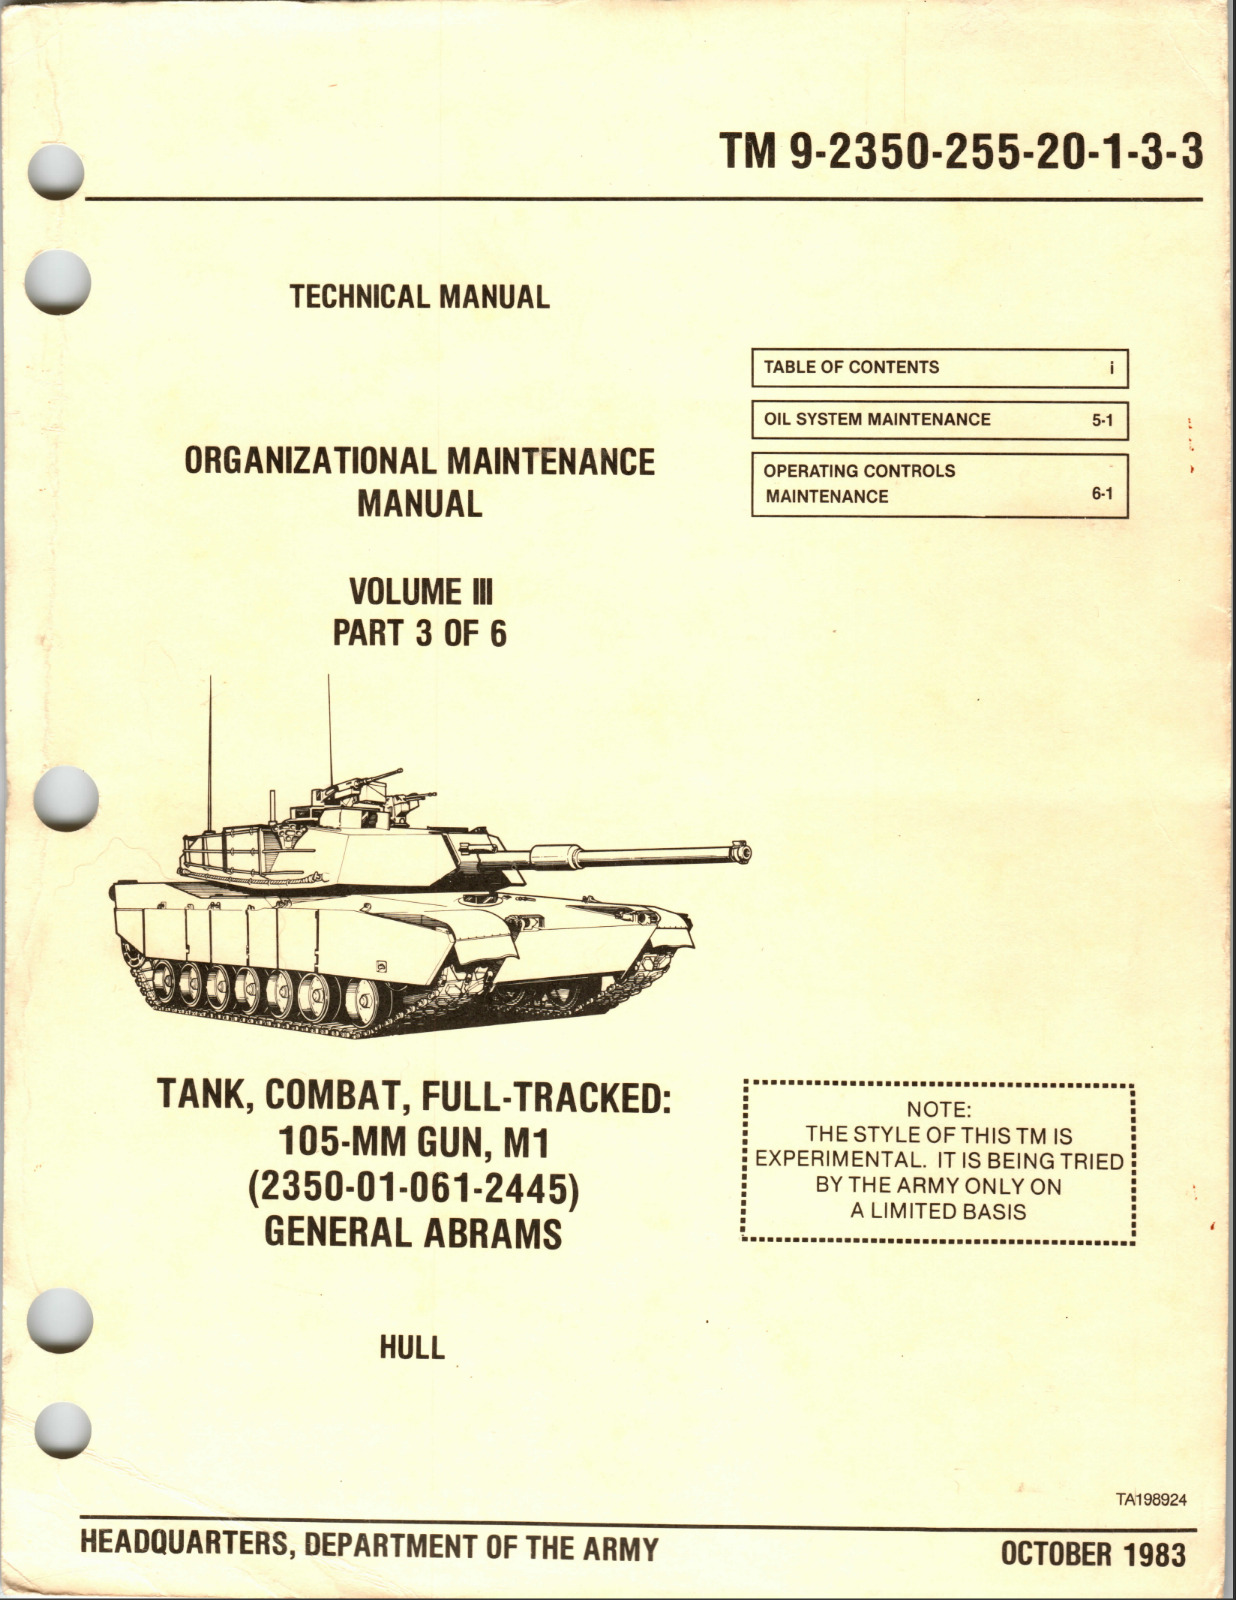 634 Page 1983 TM 9-2350-255-20-1-3-3 M1 ABRAMS TANK Hull Maintenance on Data DVD